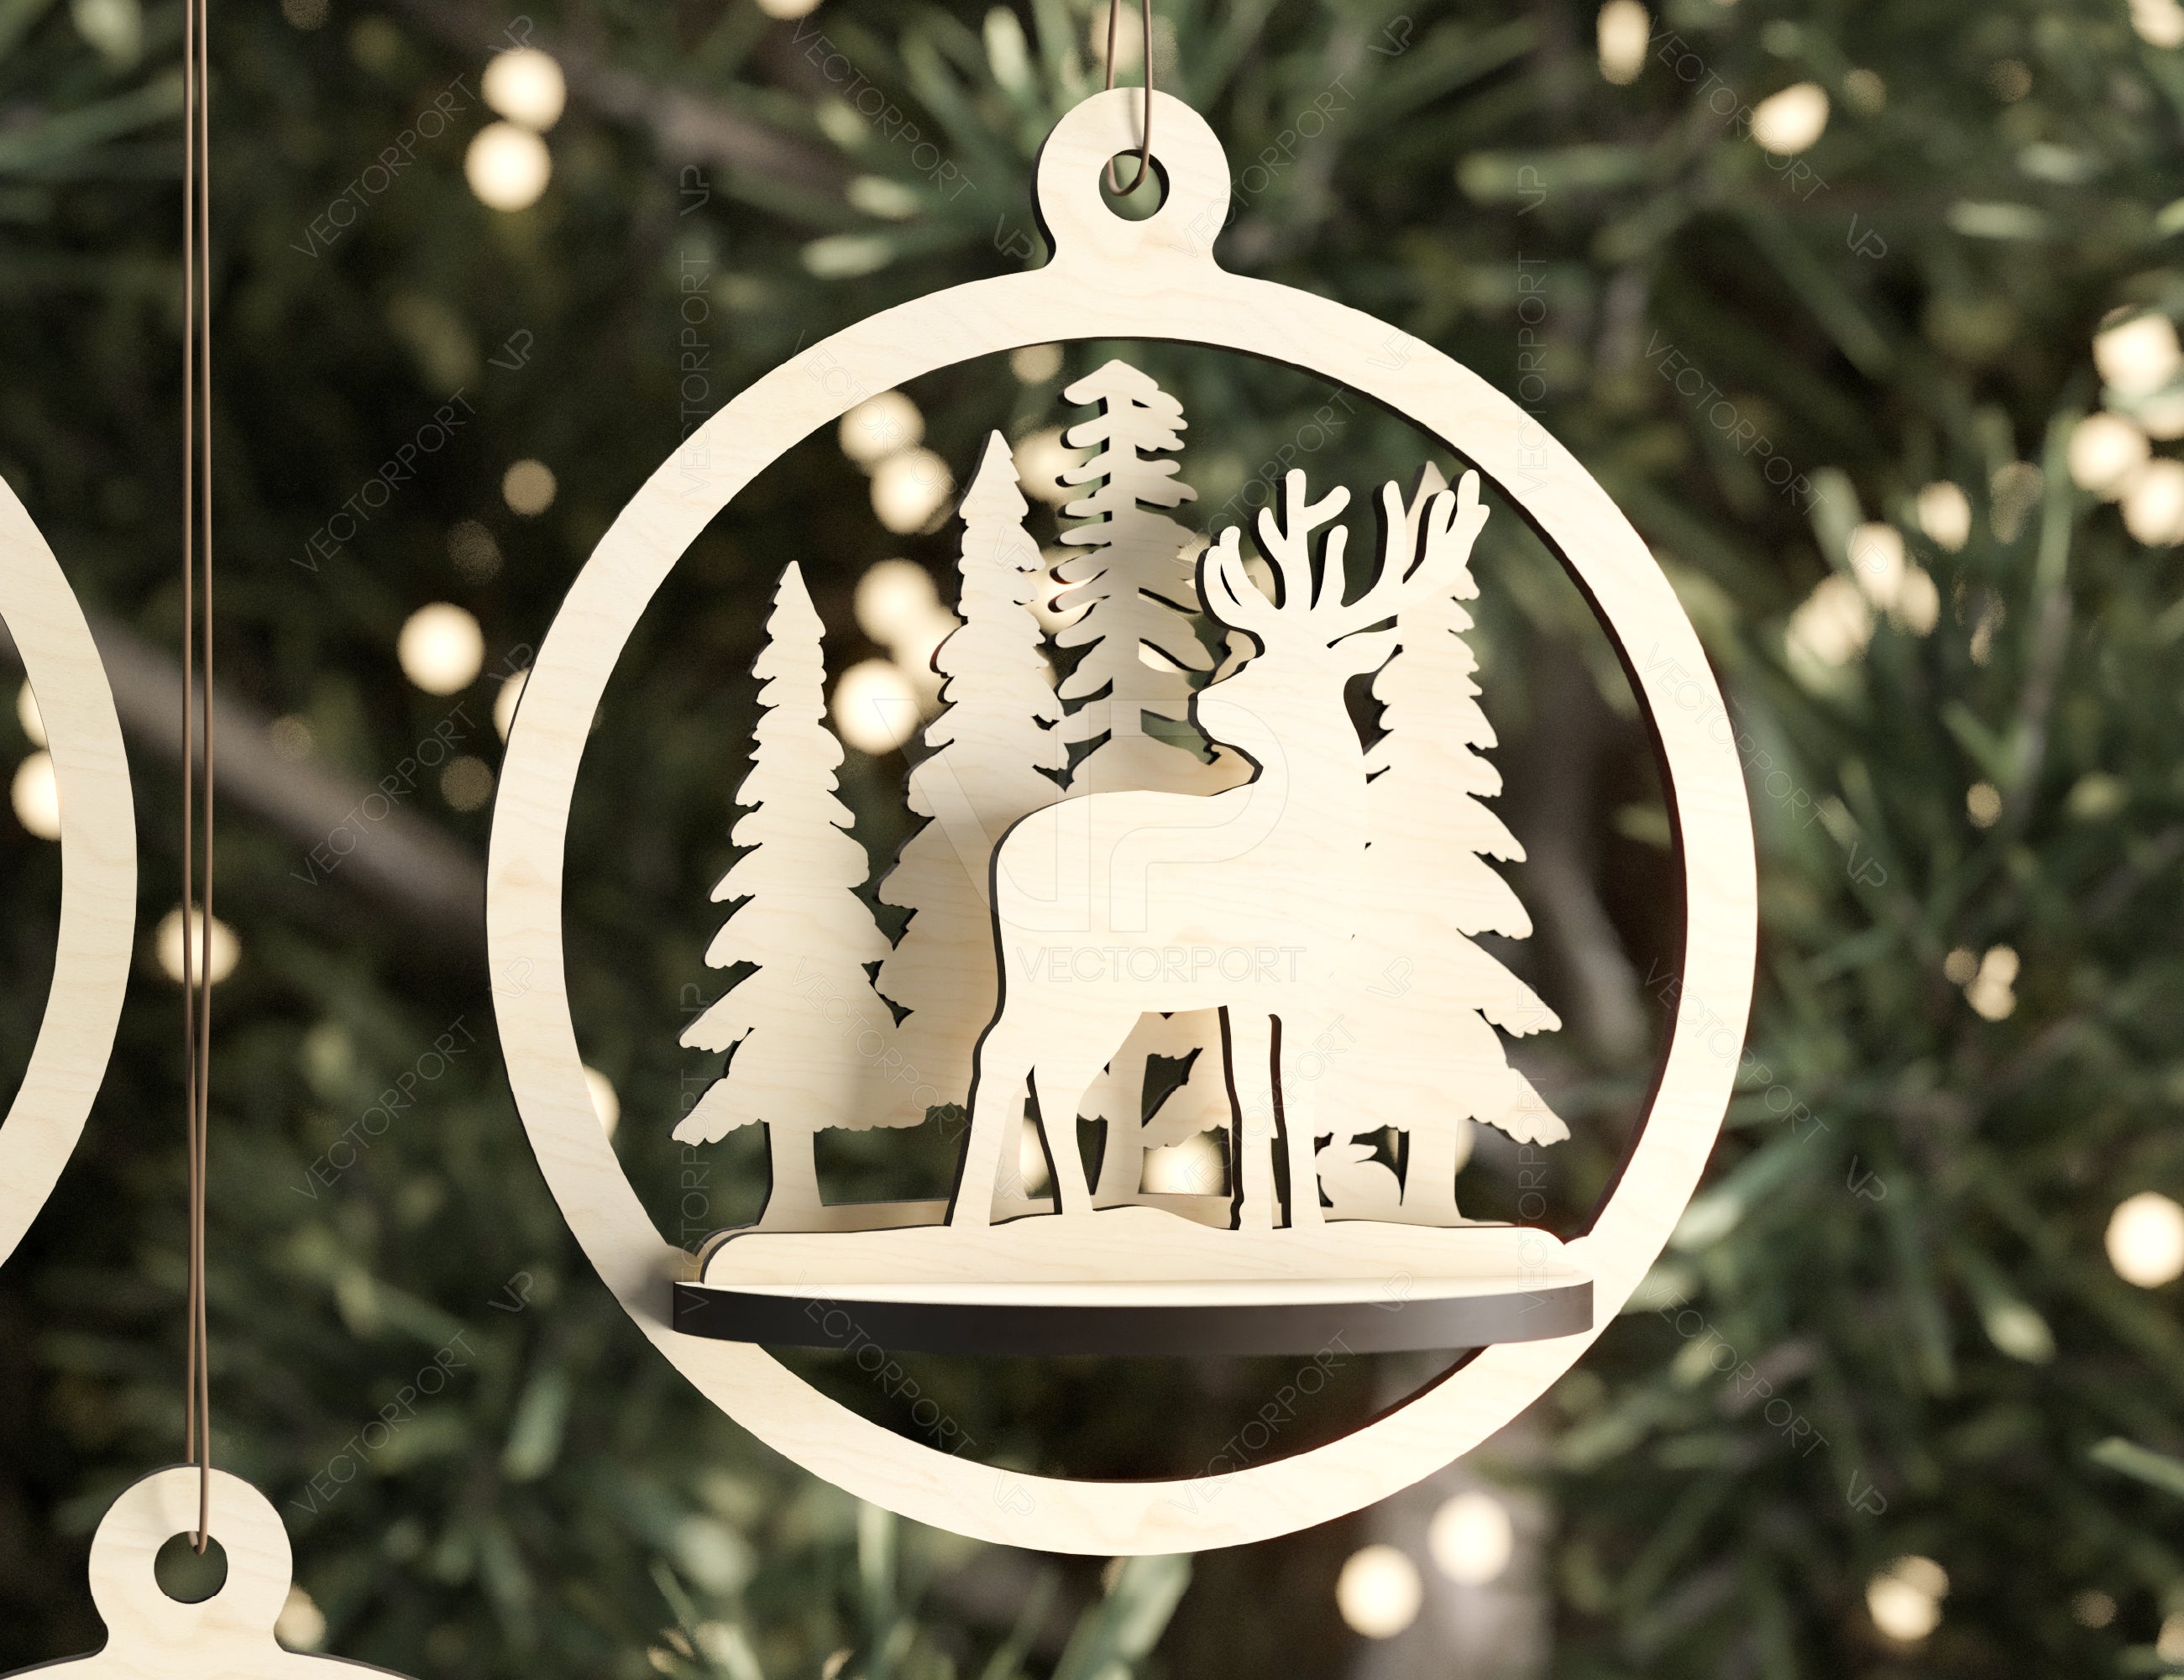 3D Tree Bauble Wood Laser Cut Christmas Ball Ornament New Year Tree Decorations SVG Digital Download |#U265|